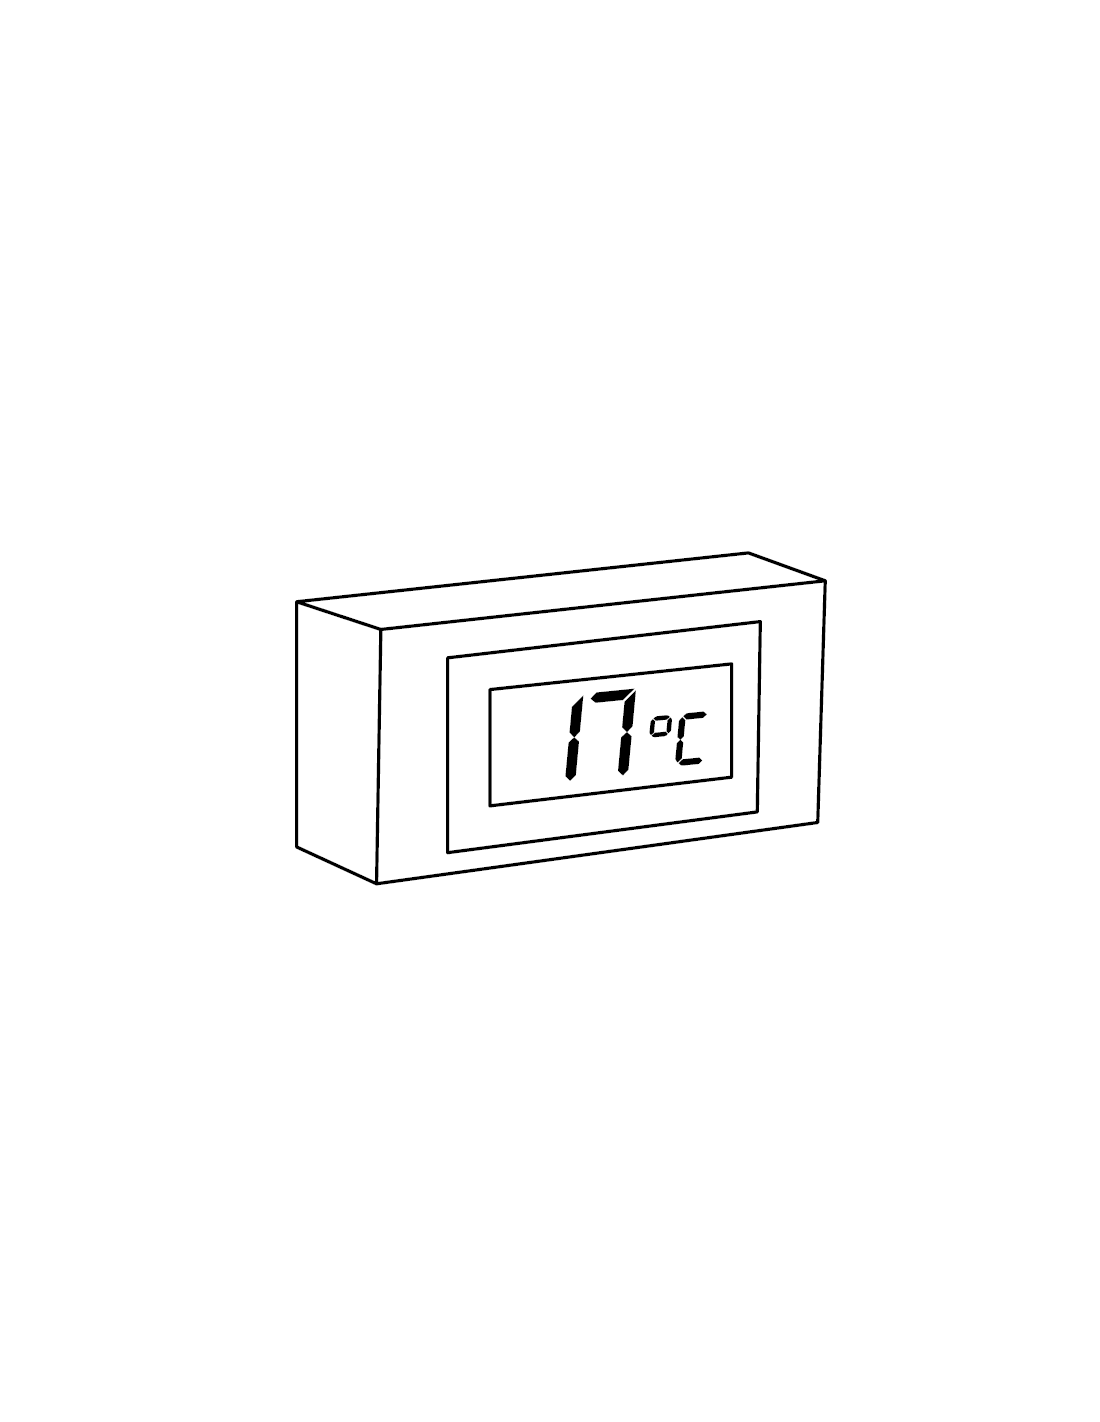 Digital thermometer for wooden shelves